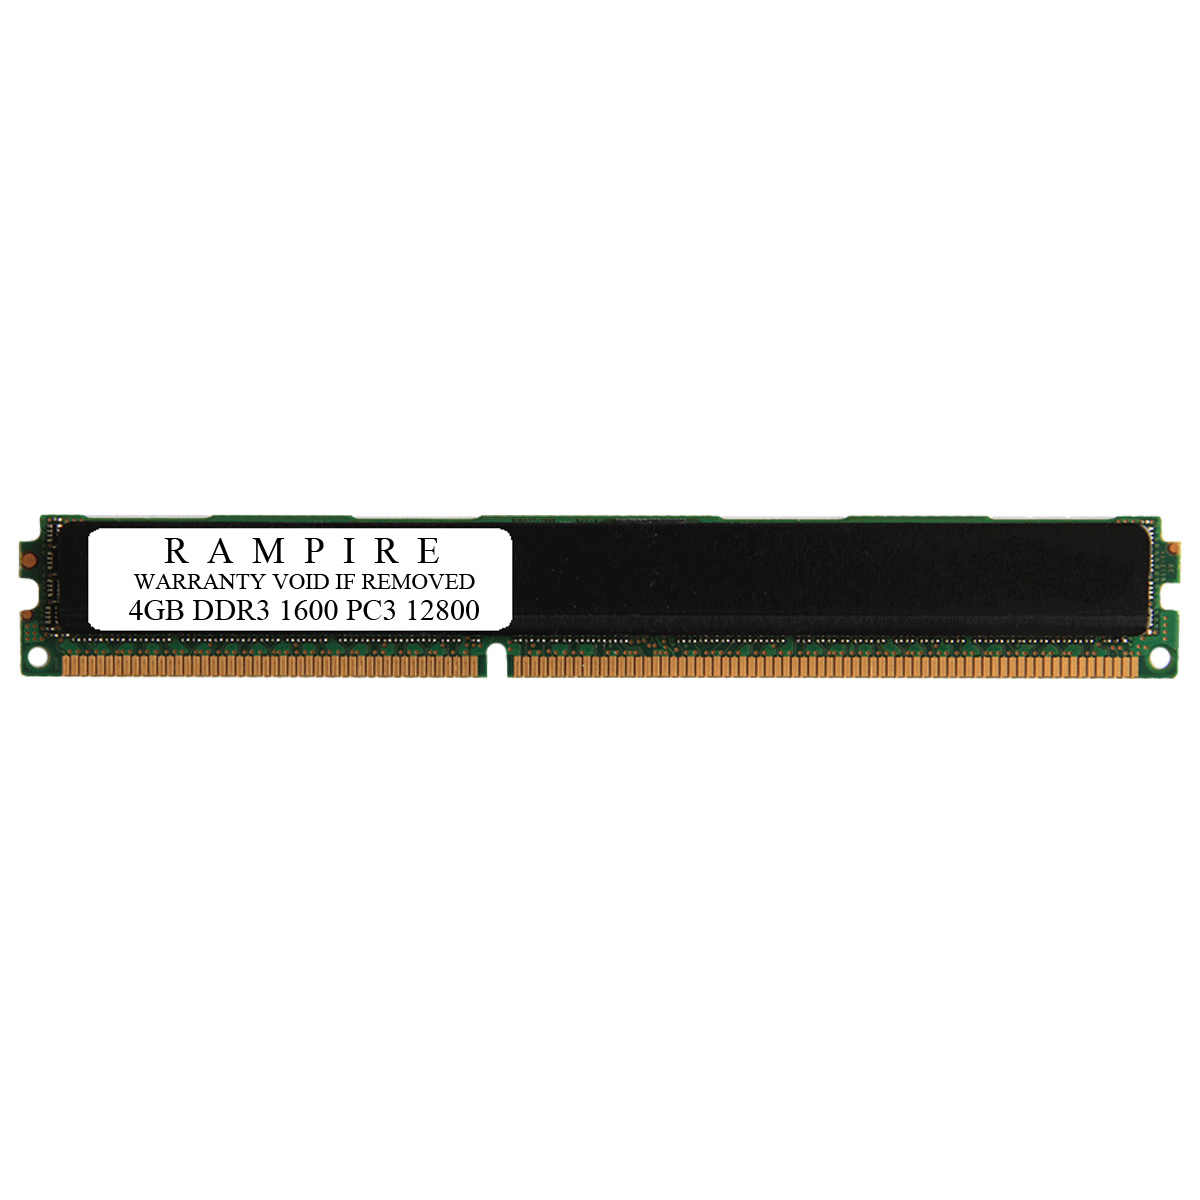 RAMPIRE 4GB DDR3 1600 (PC3 12800) 240-Pin SDRAM 2Rx8 VLP (Low Profile) 1.5V ECC Registered Server Memory